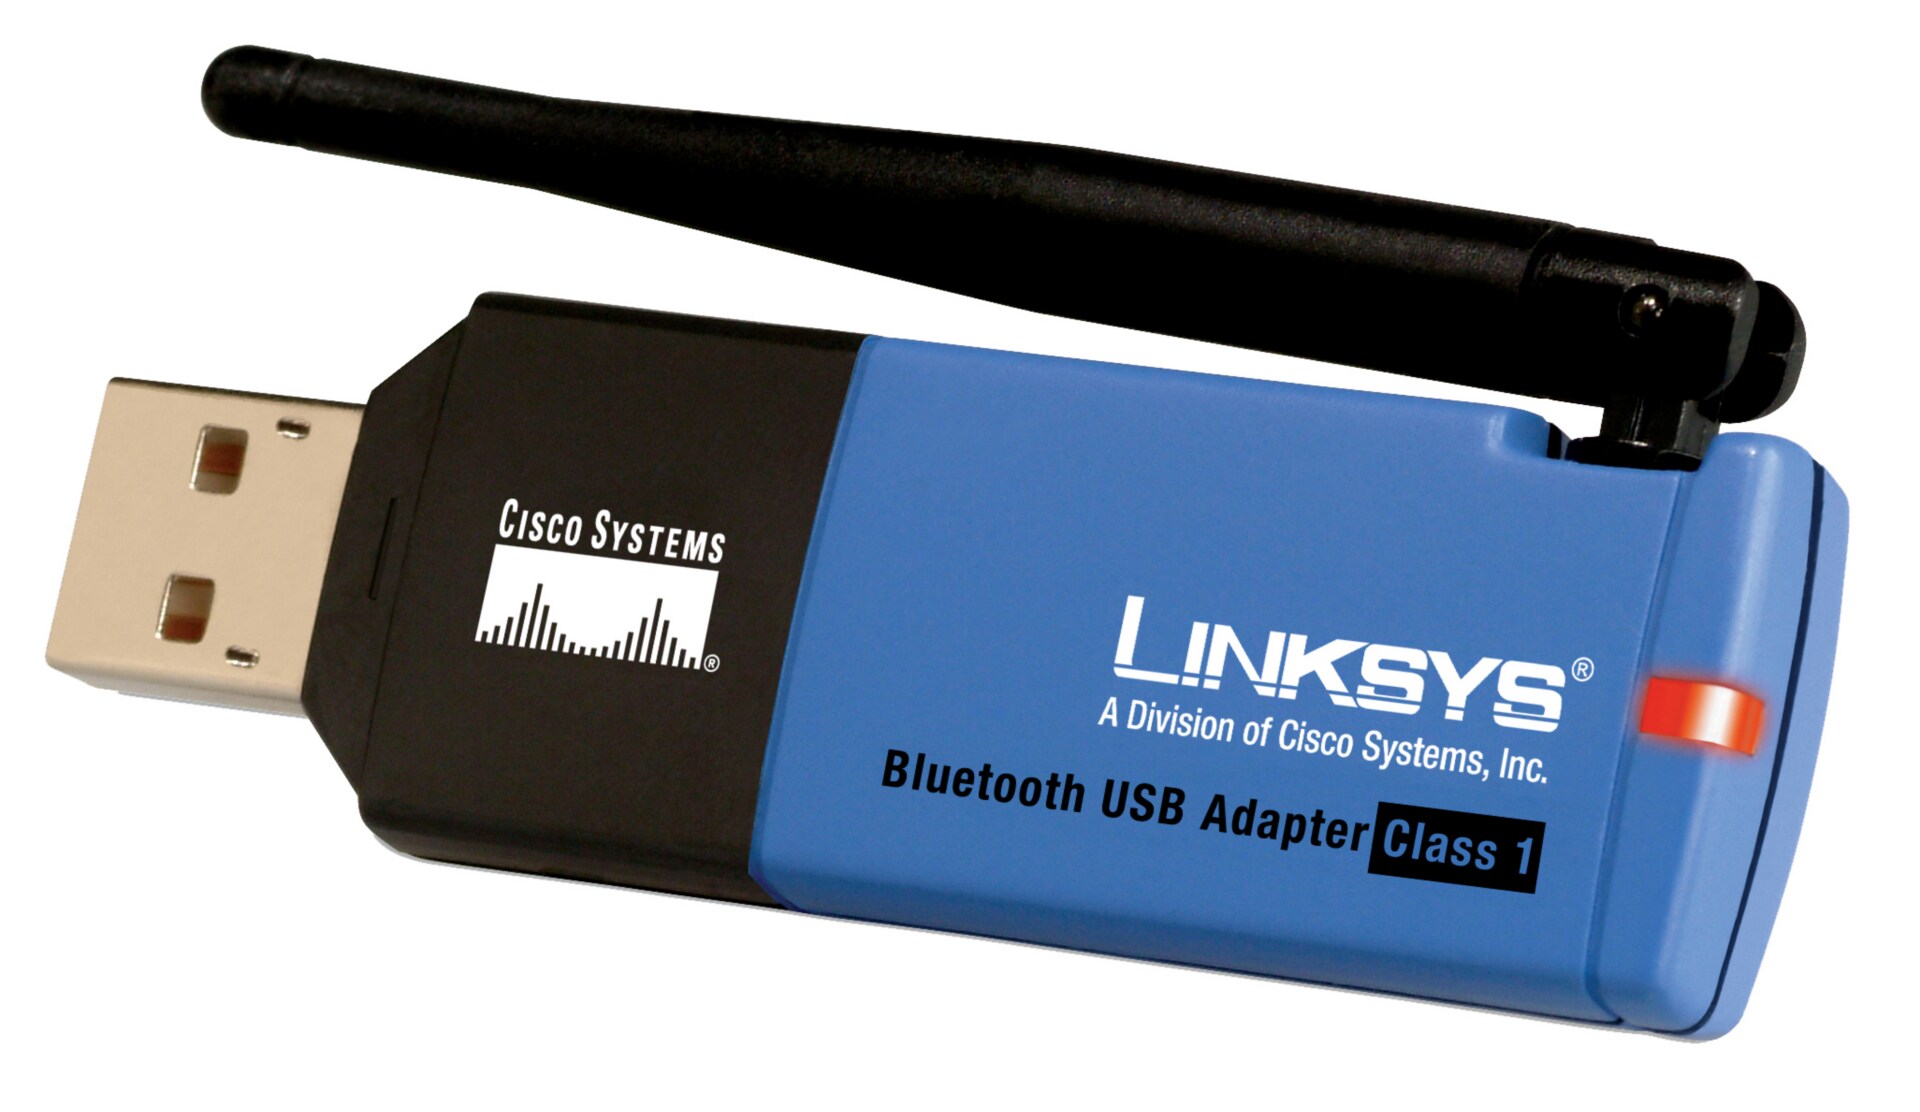 Linksys Bluetooth USB Adapter						
